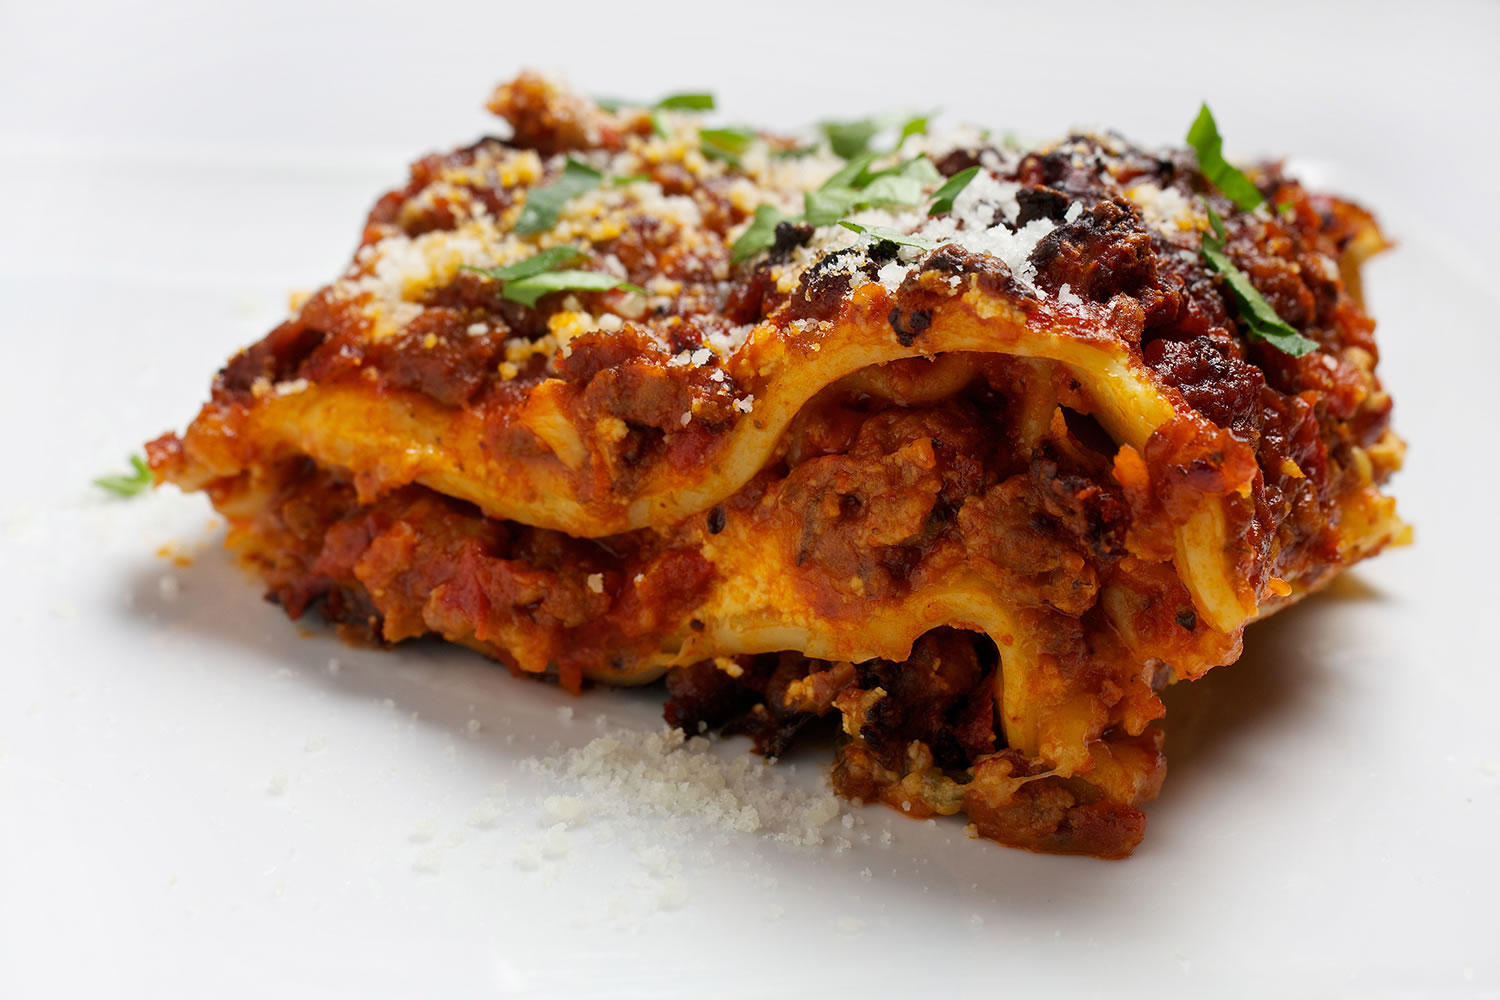 John Chandler's lasagna has reigned as the most popular recipe on AllRecipes.com for more than a decade.